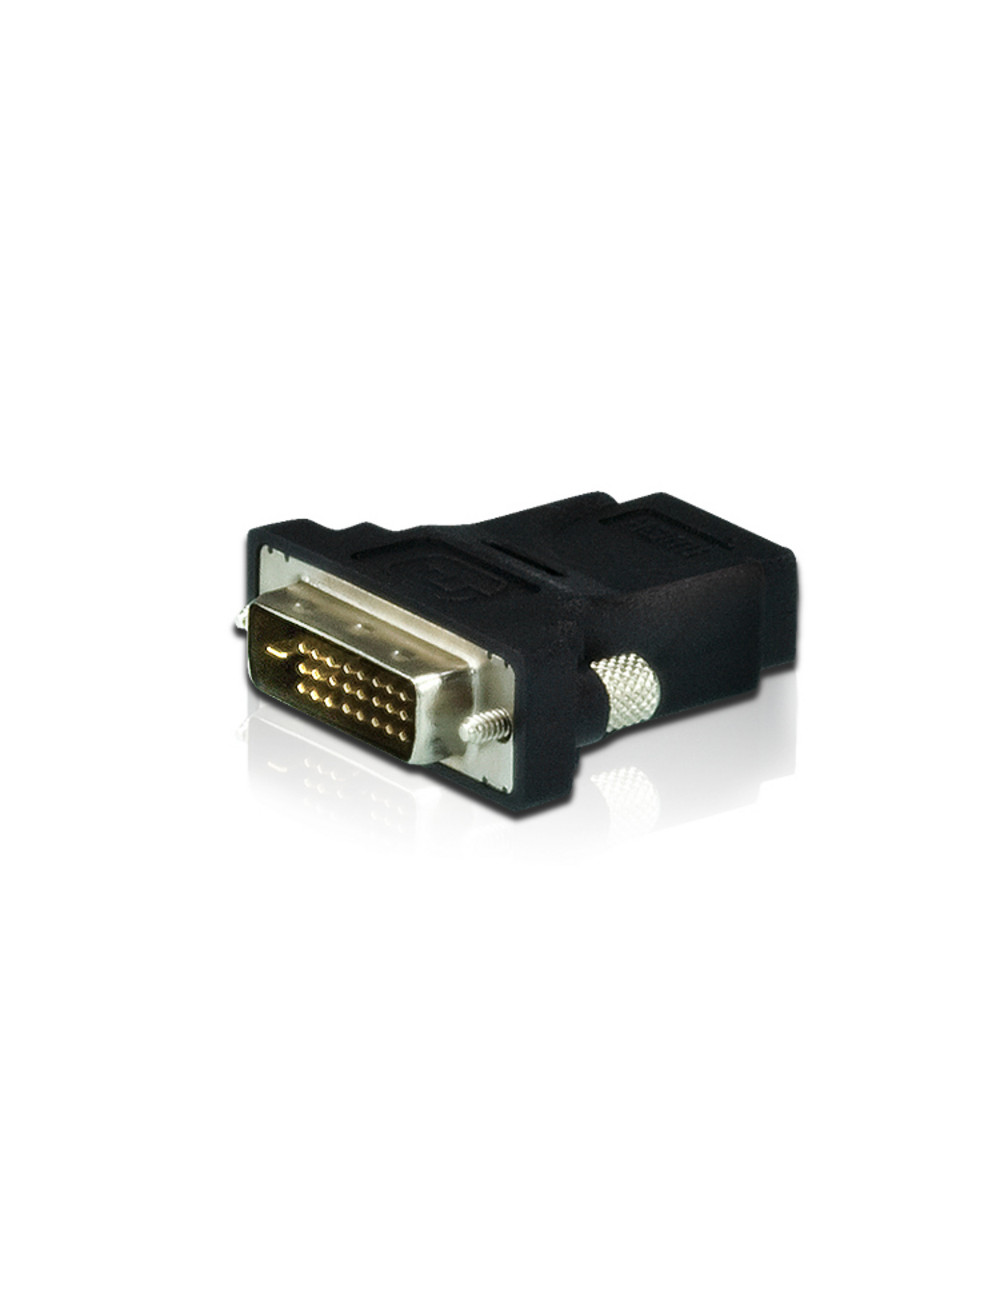 Aten DVI to HDMI Adapter 2A-127G Black